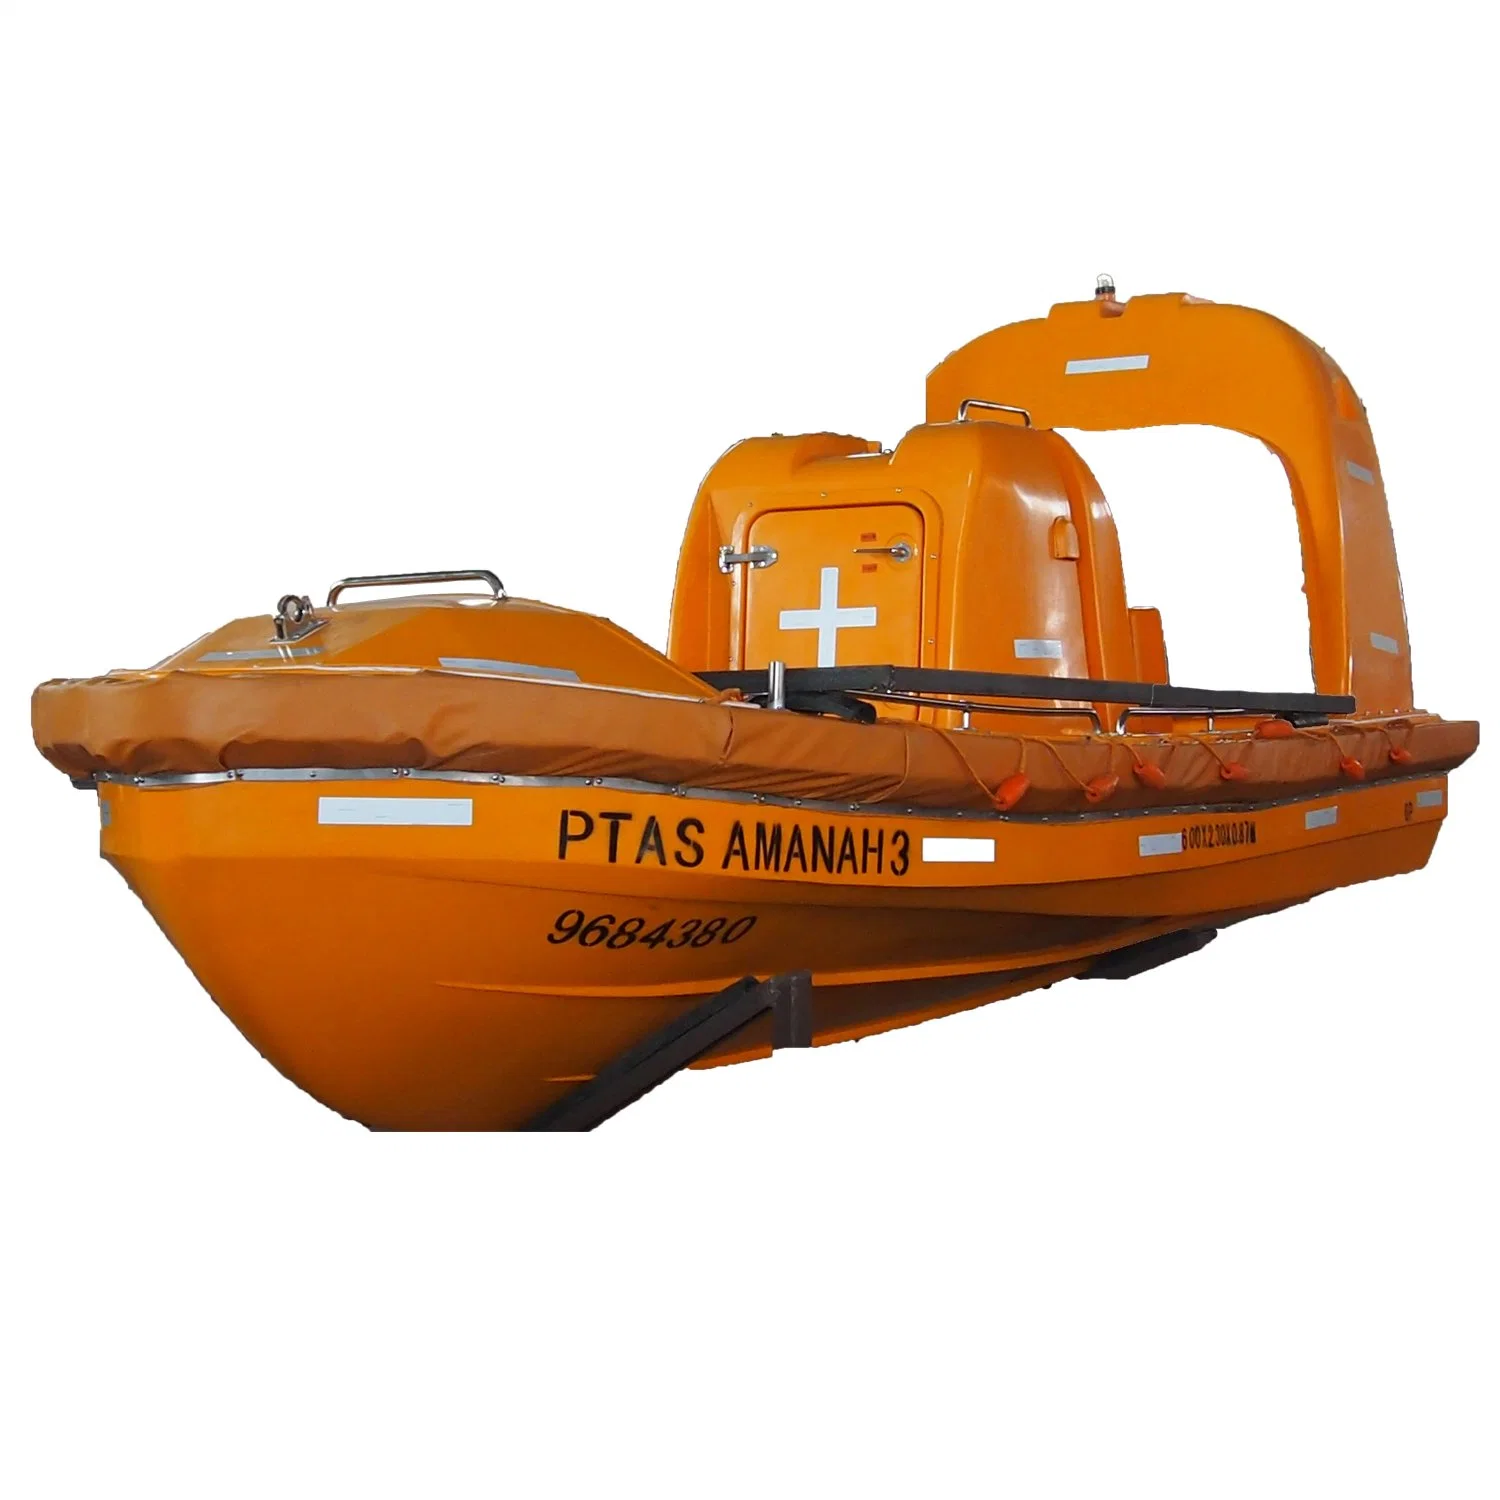 15p Capacity Marine Lifesaving Equipment Orange Color Fiberglass Water Rescue Boat